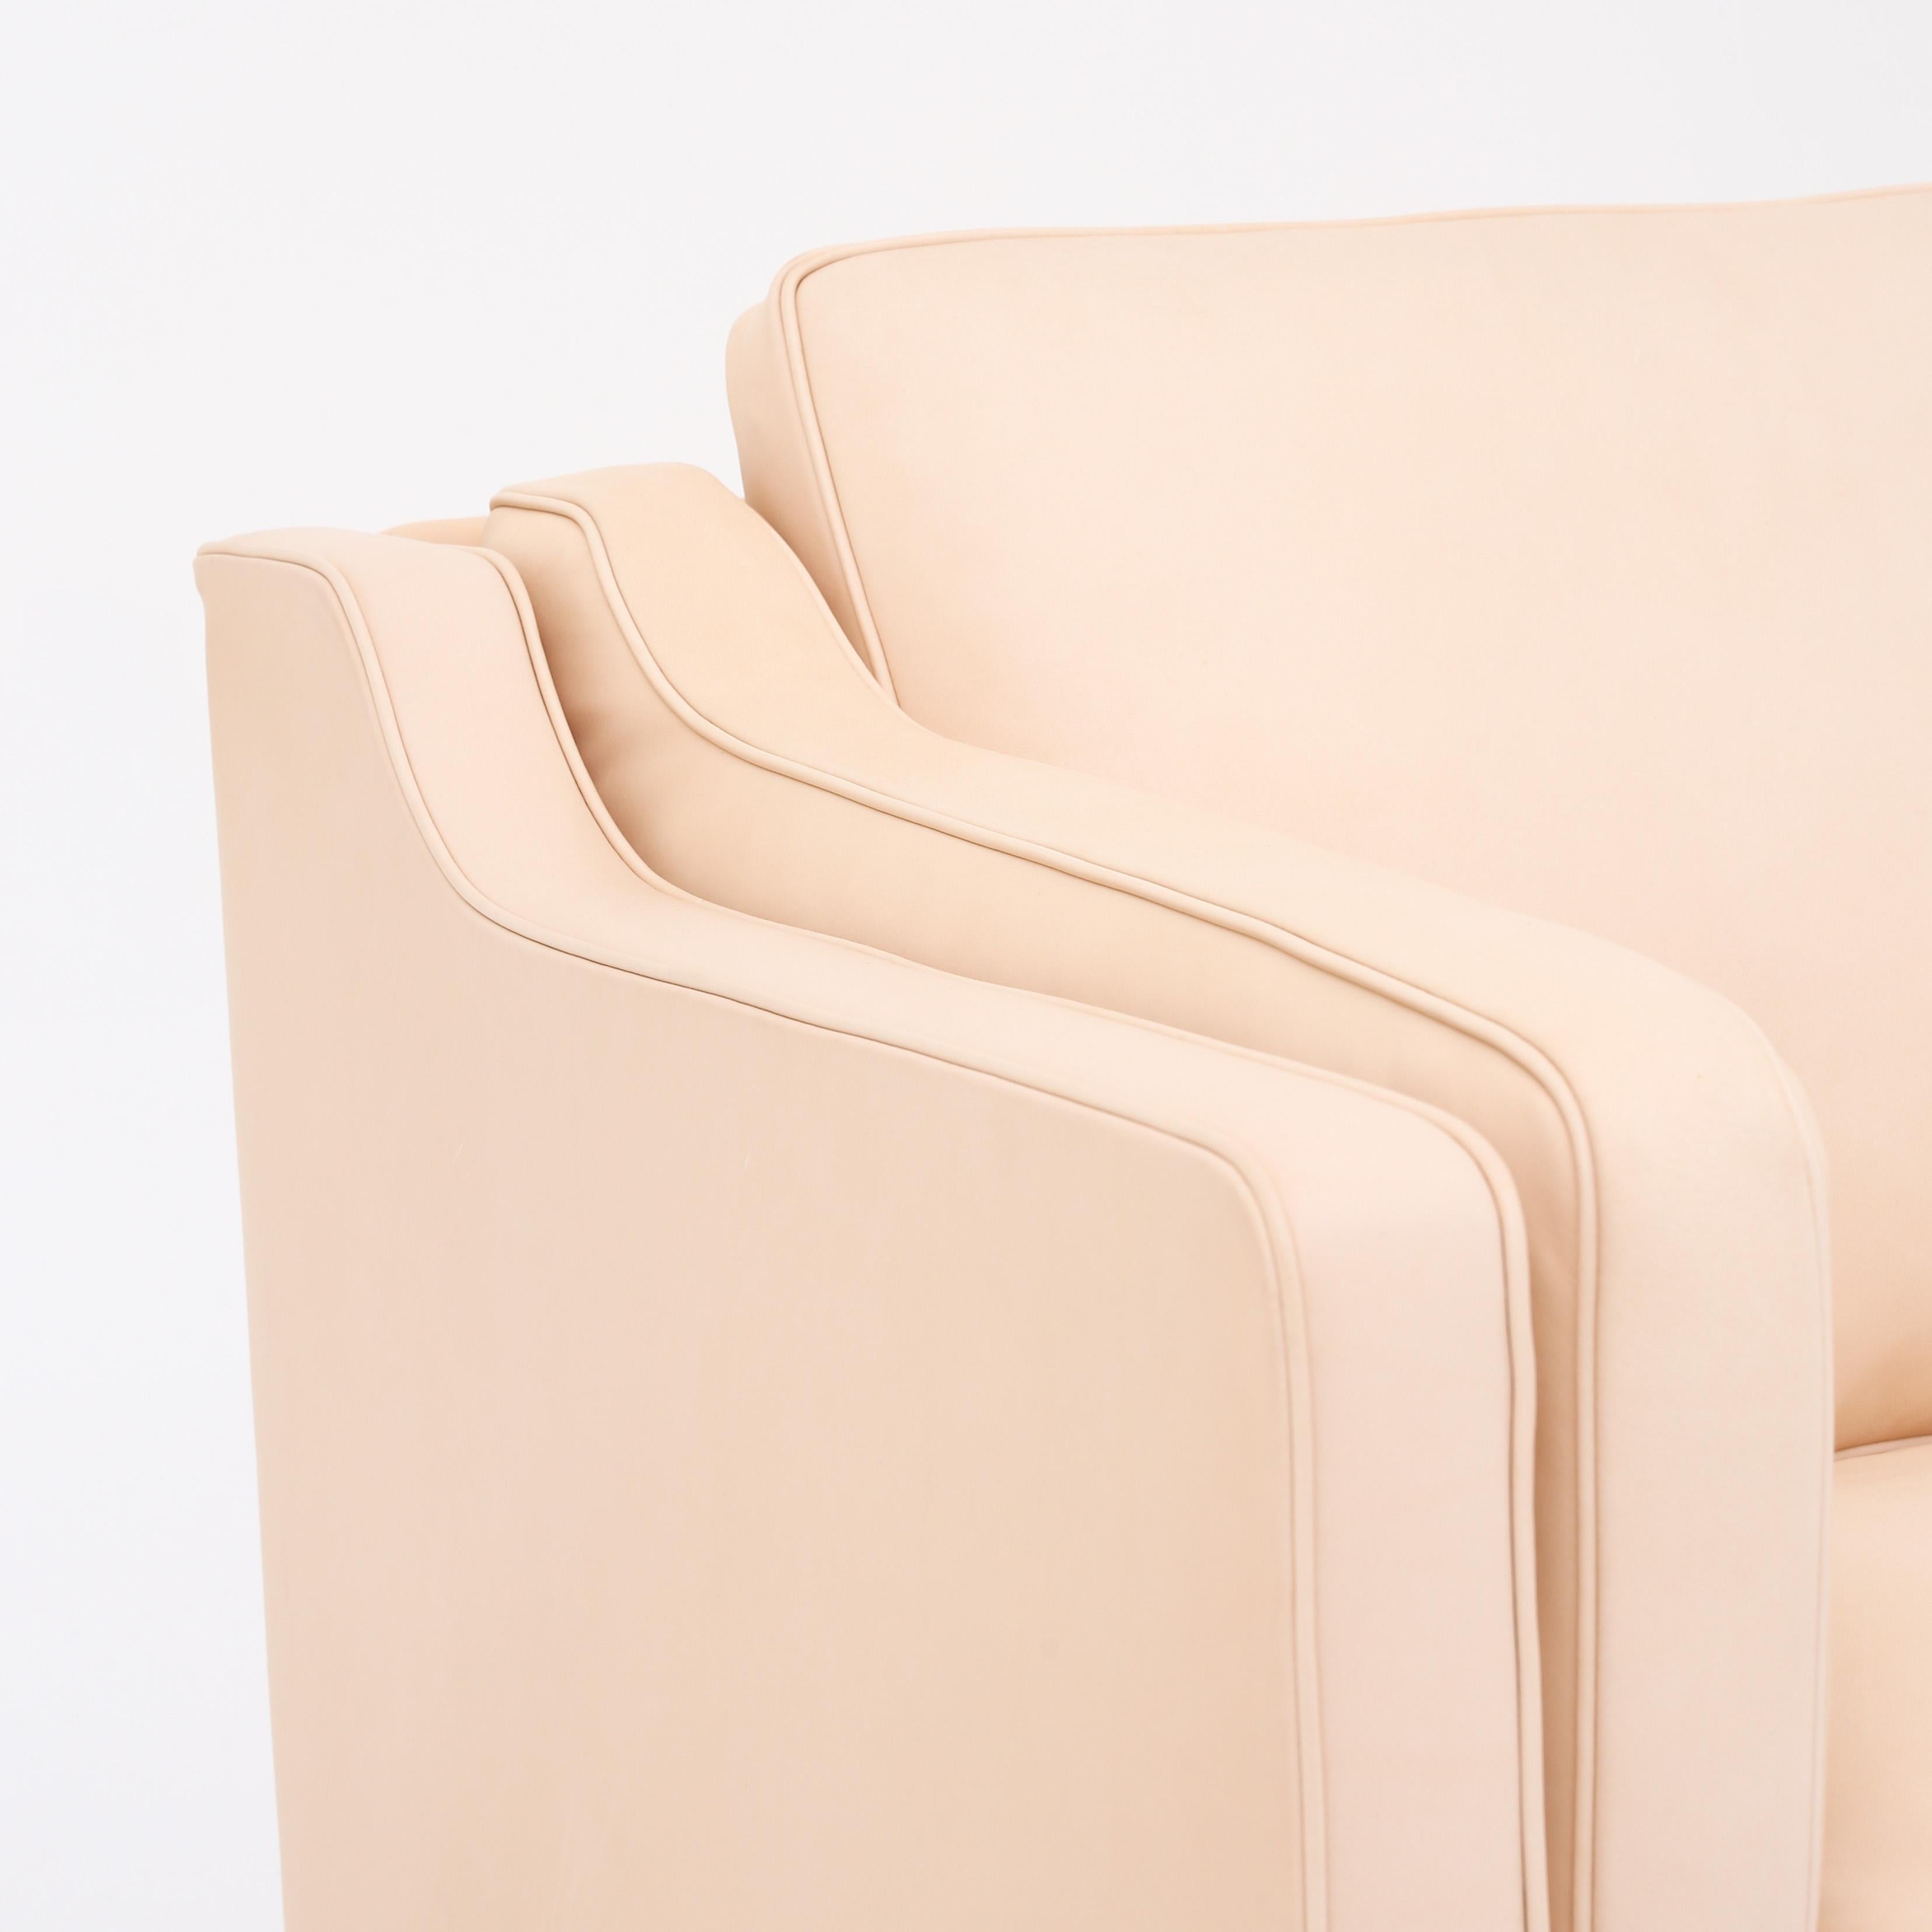 Børge Mogensen / Fredericia Furniture. BM 2213 - Reupholstered 3-seater sofa in natural leather.